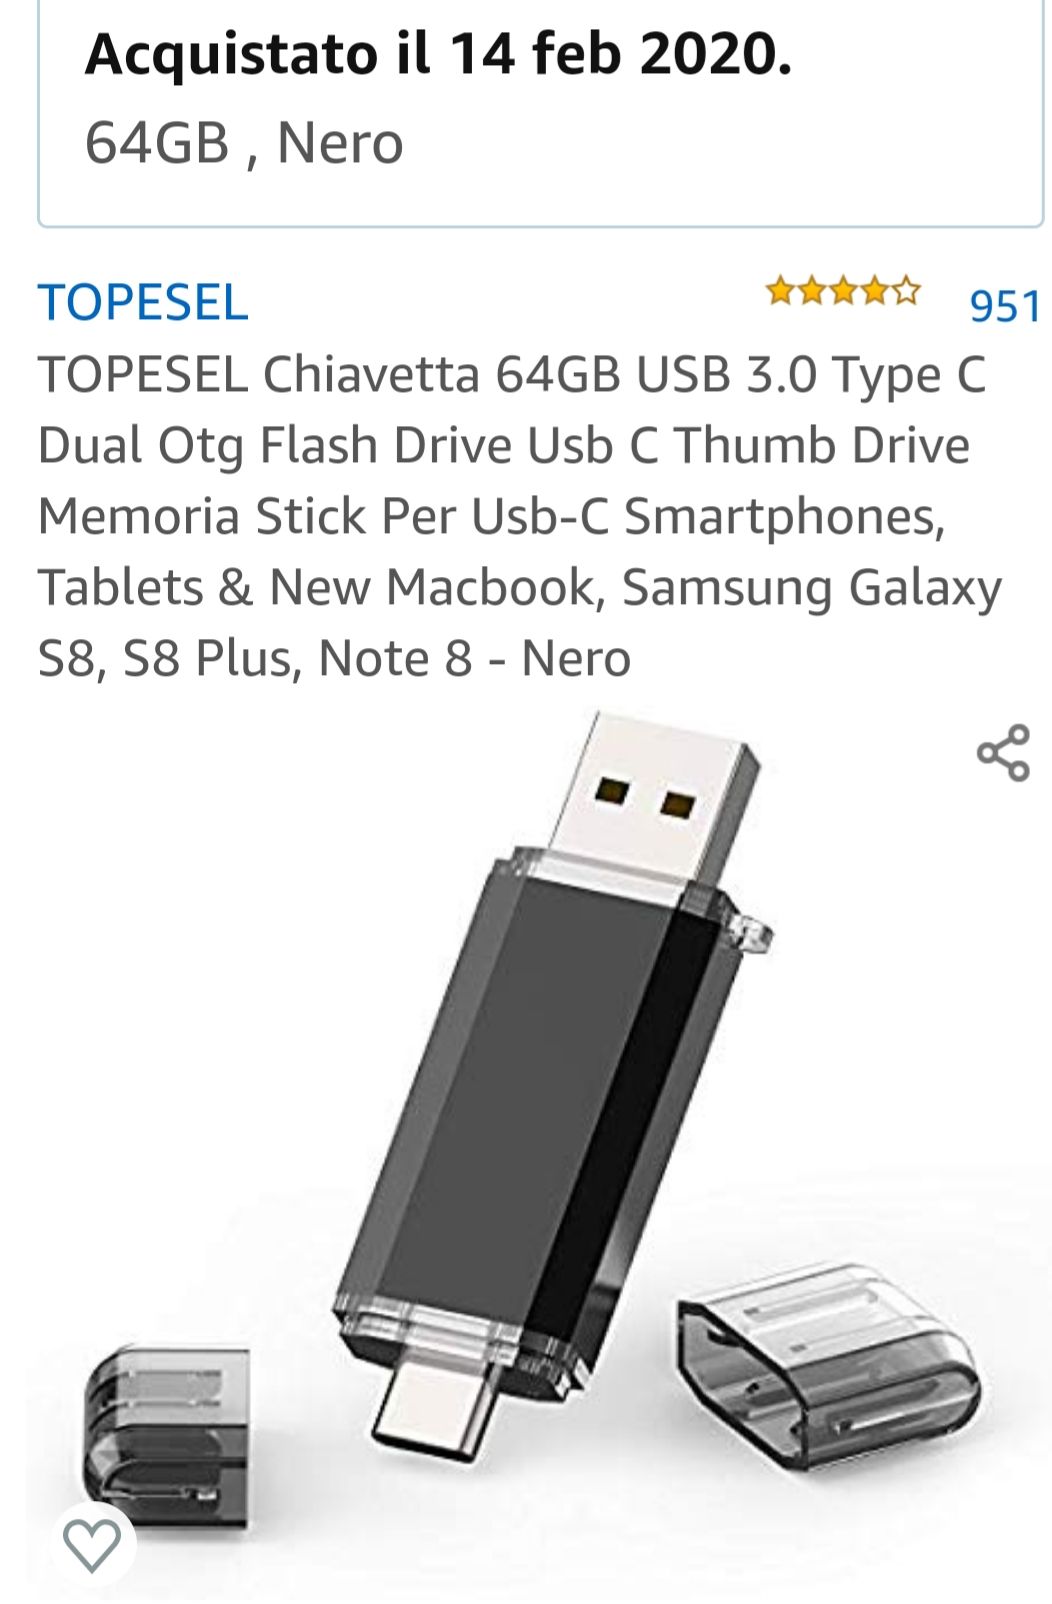 Penna USB su A50 - Pagina 2 - Samsung Community